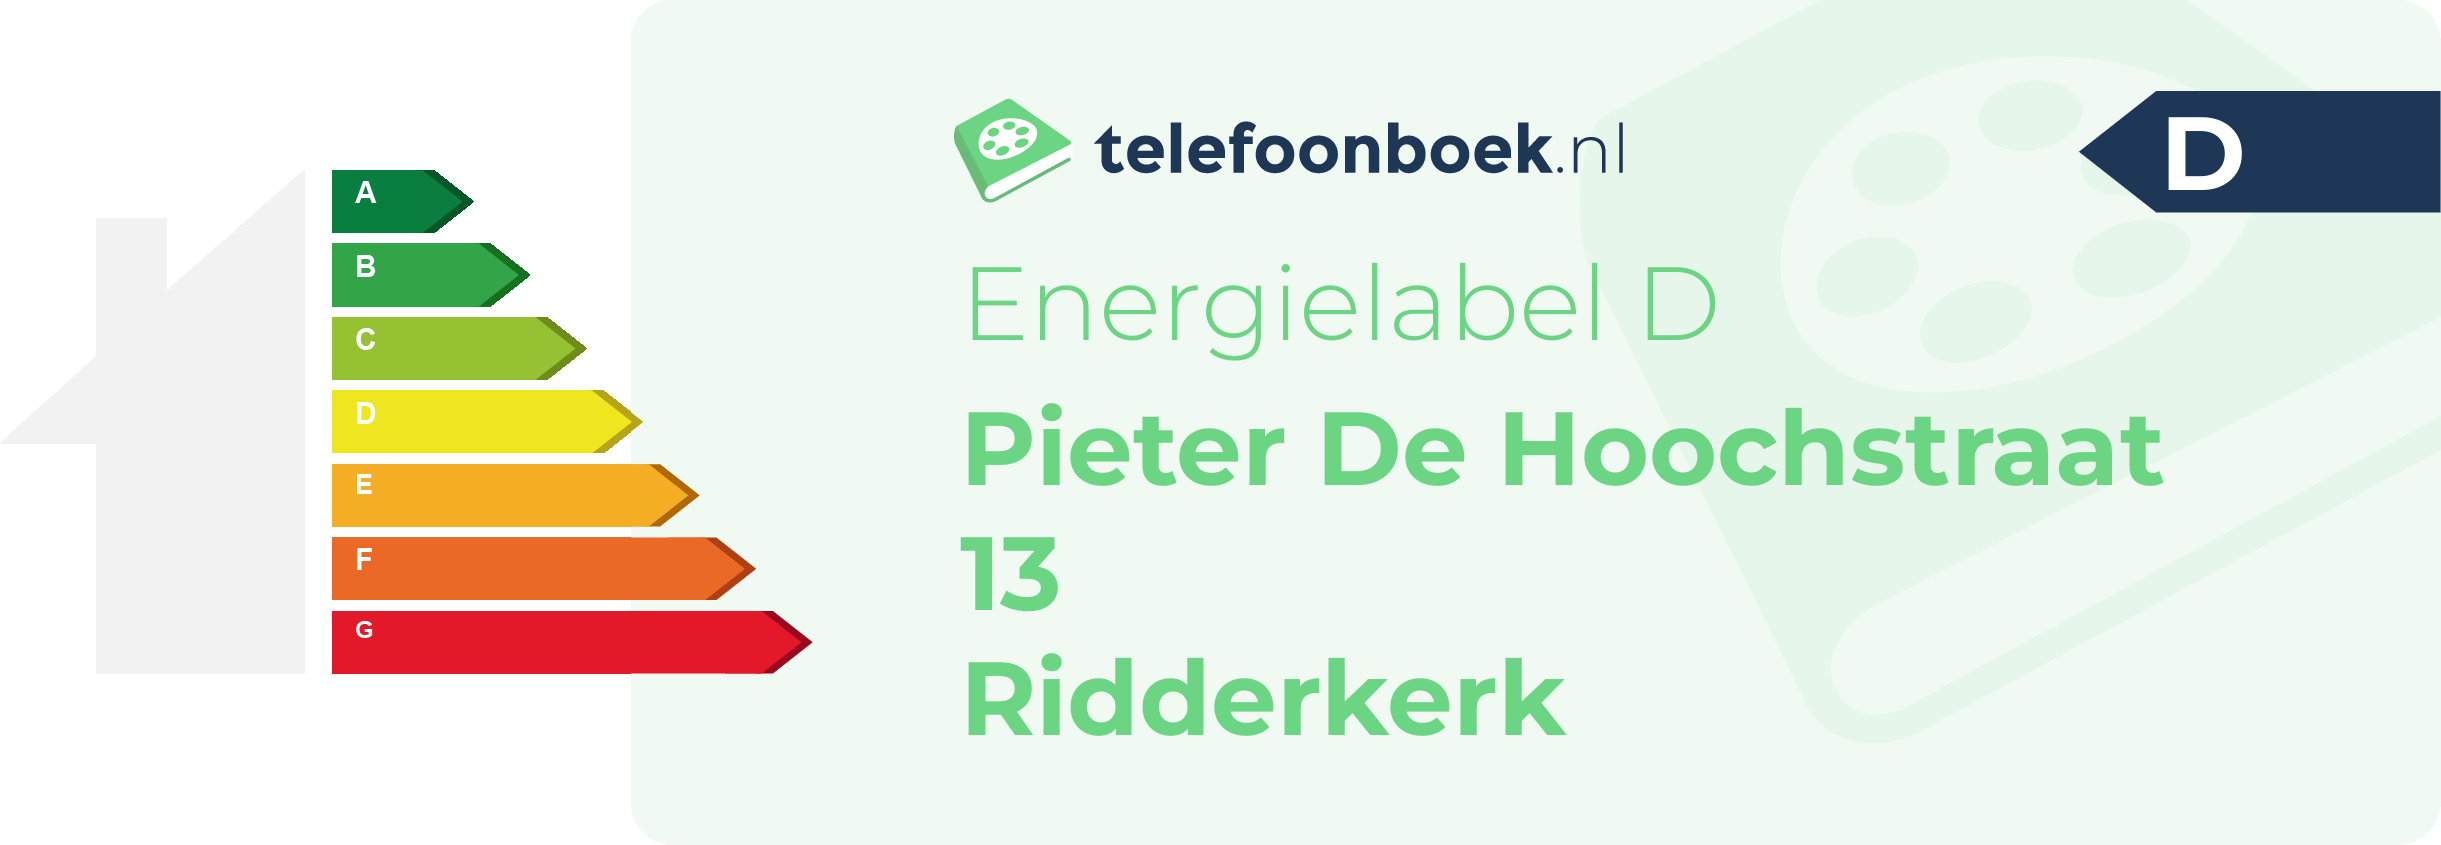 Energielabel Pieter De Hoochstraat 13 Ridderkerk